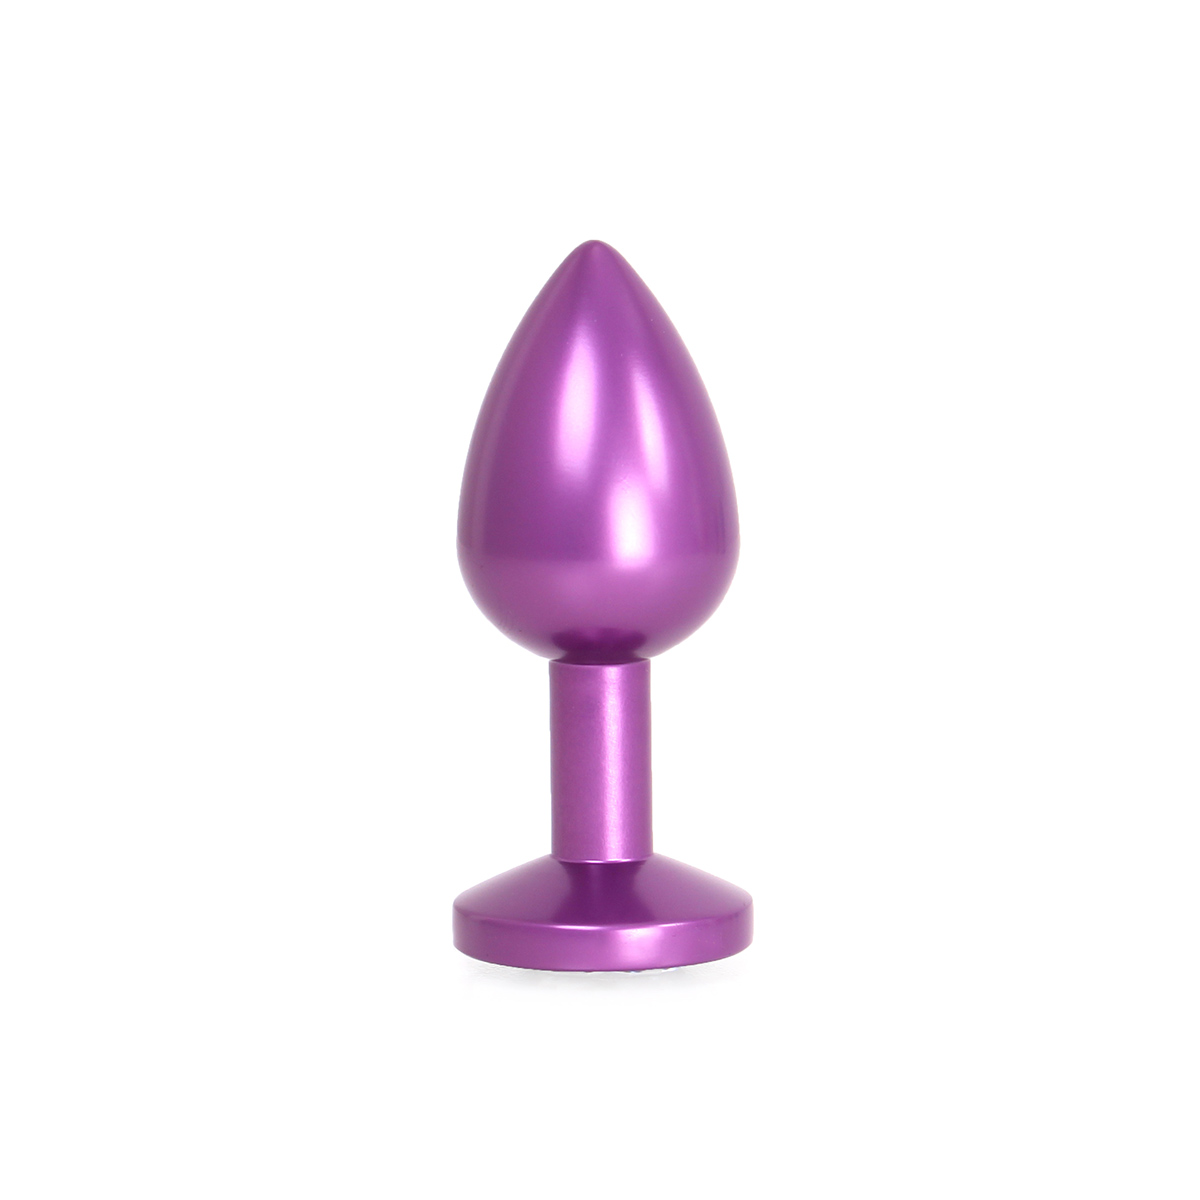 Aluminium-Buttplug-Purple-with-Clear-Gem-OPR-2820035-2